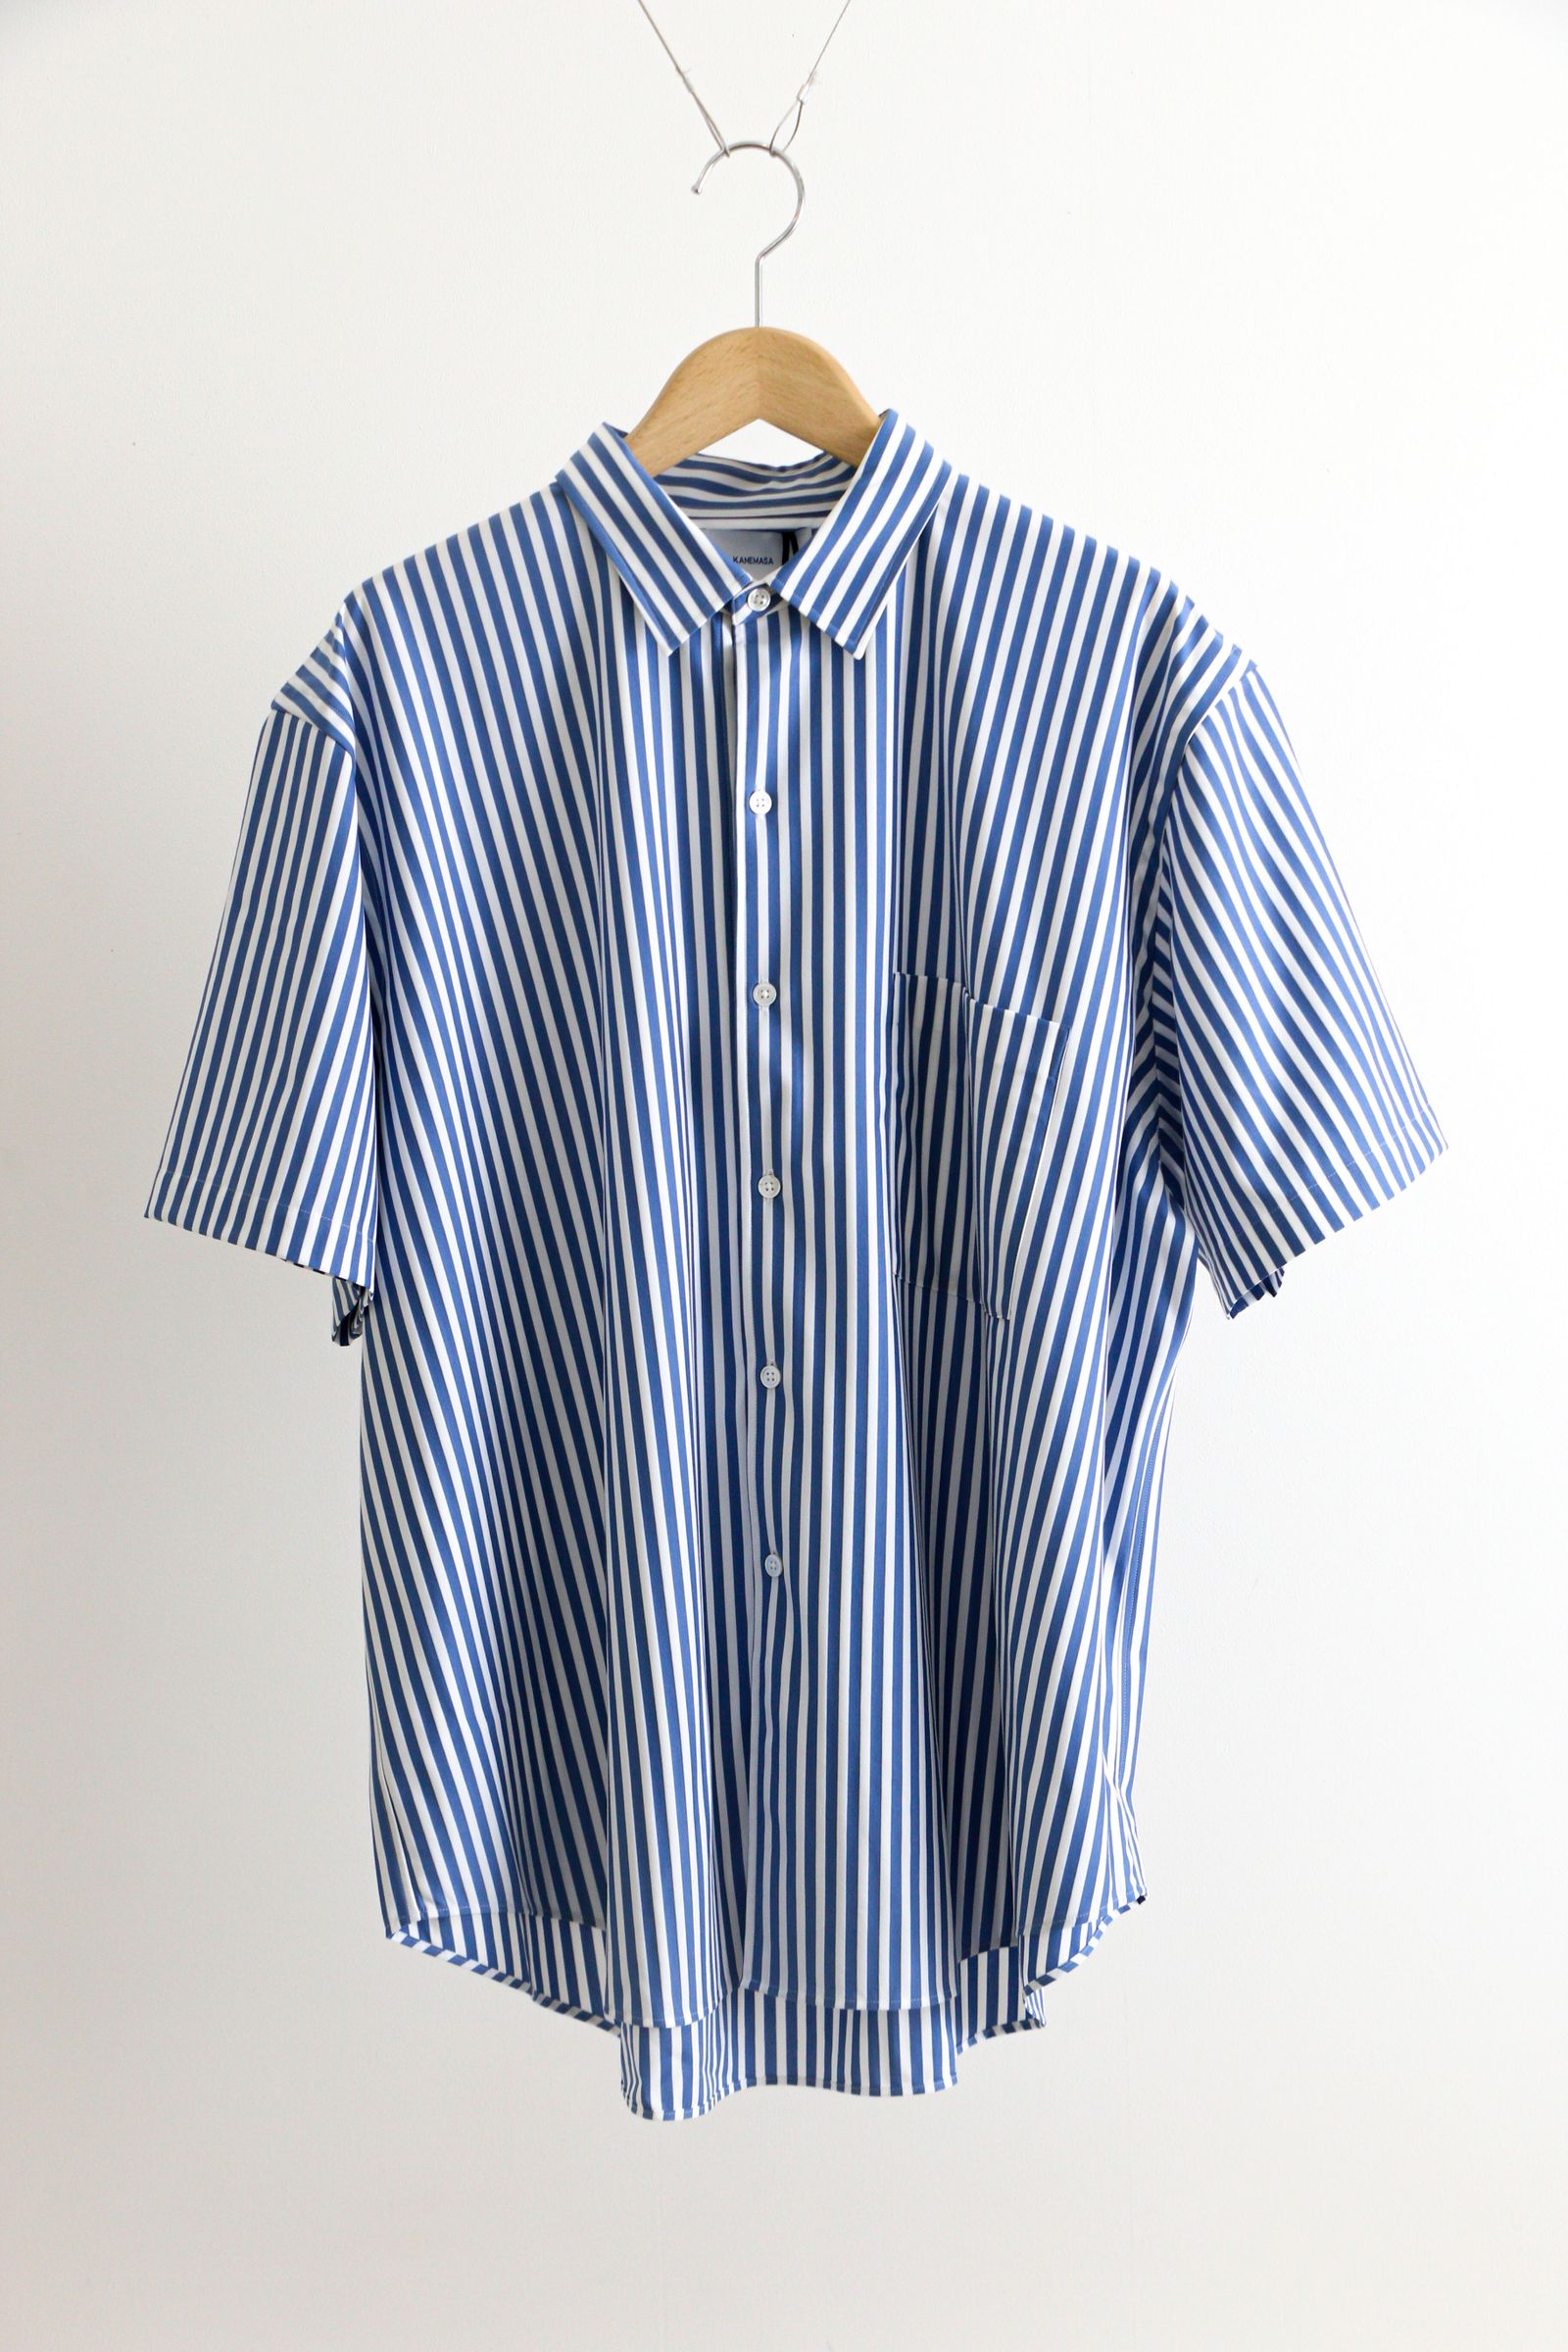 Royal Ox Dress Jersey Short Sleeve Shirt ULTRAMARINE×WHITE / ショートスリーブシャツ /  半袖シャツ / - 2